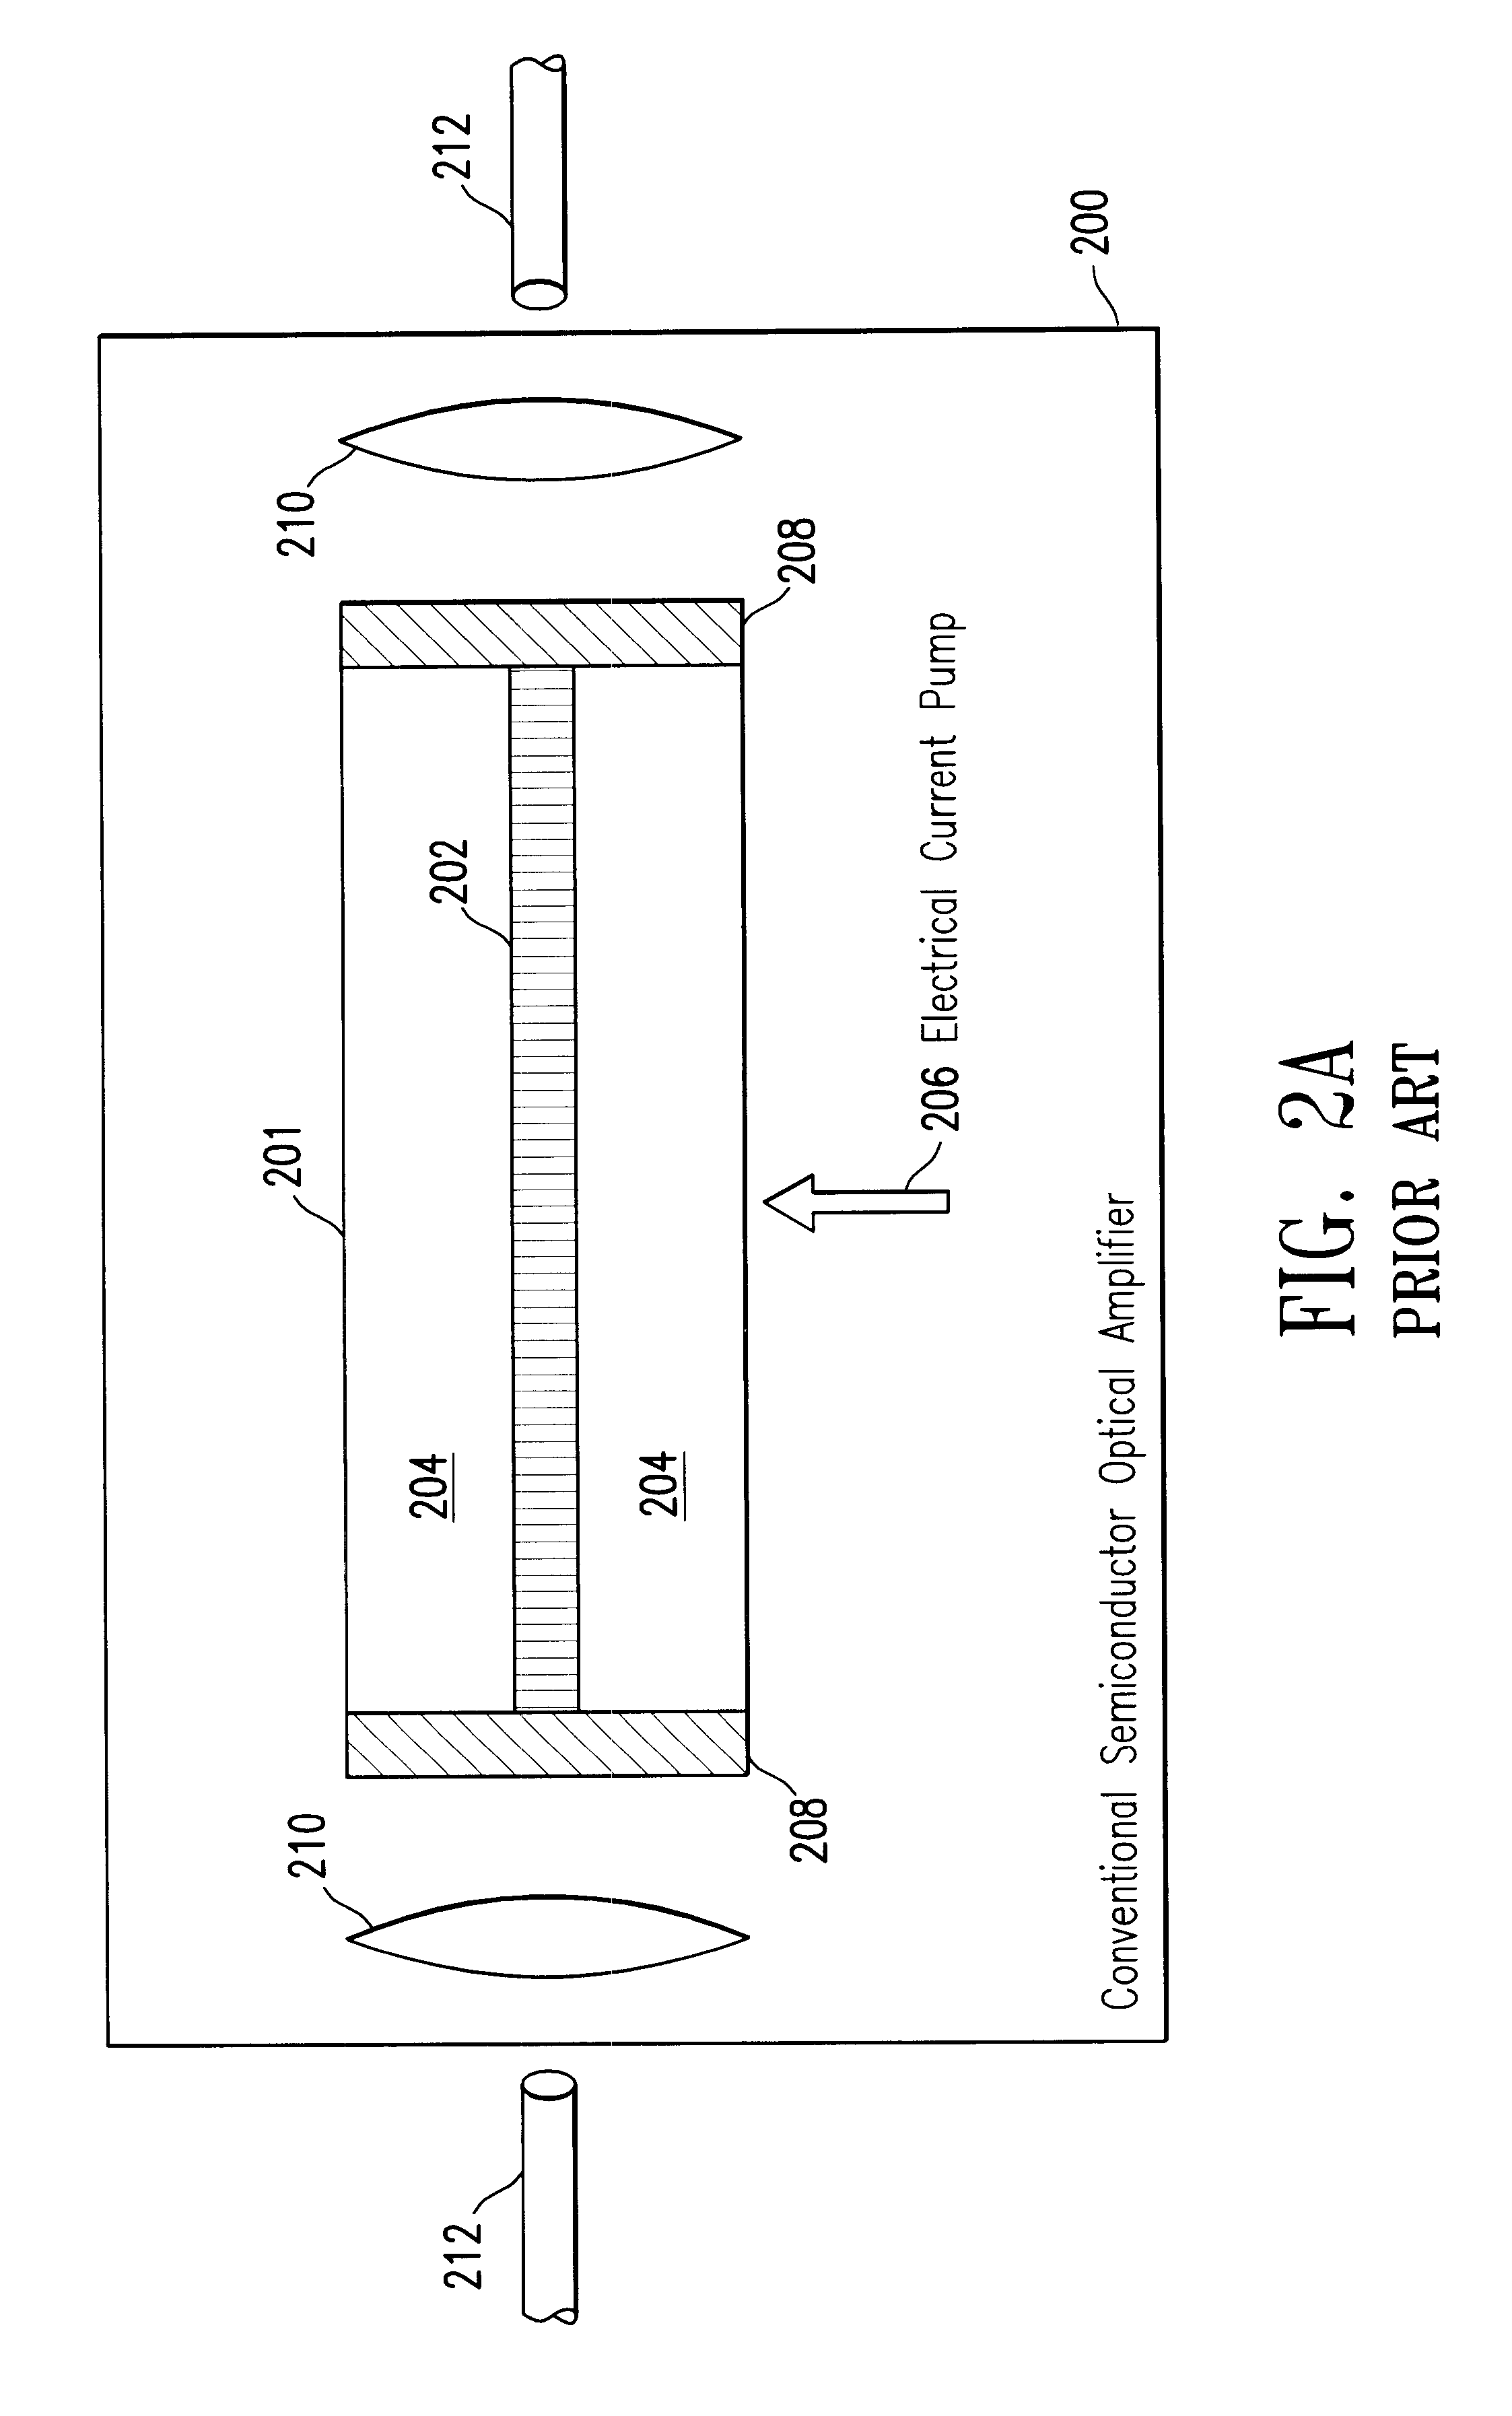 Optical signal power monitor and regulator